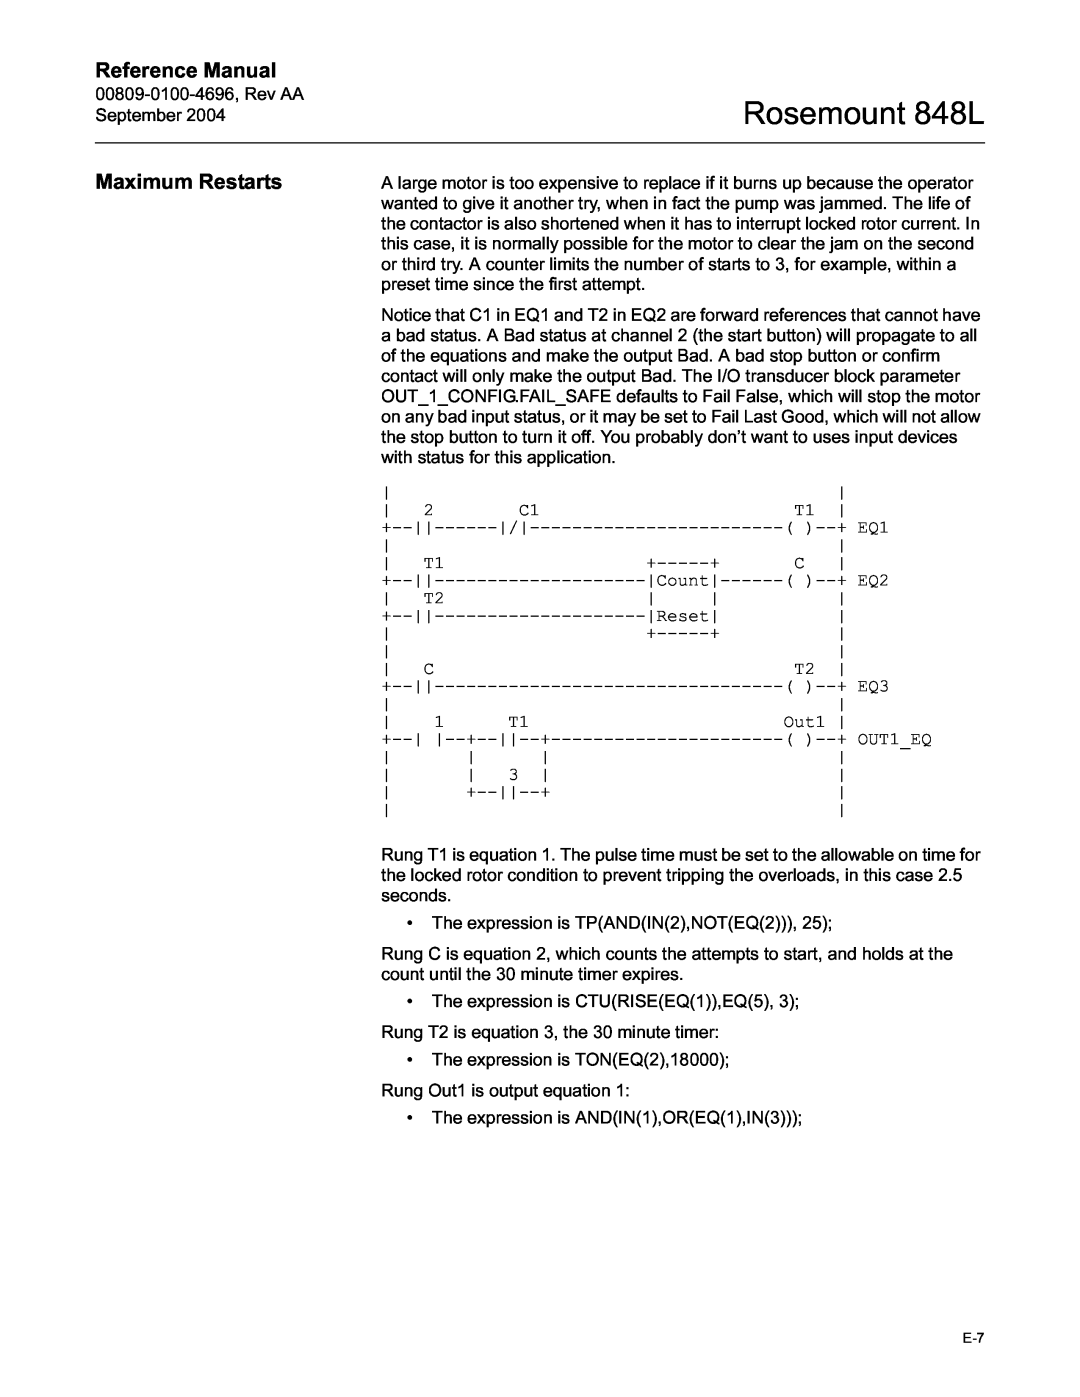 Emerson manual Maximum Restarts, Rosemount 848L, Reference Manual 